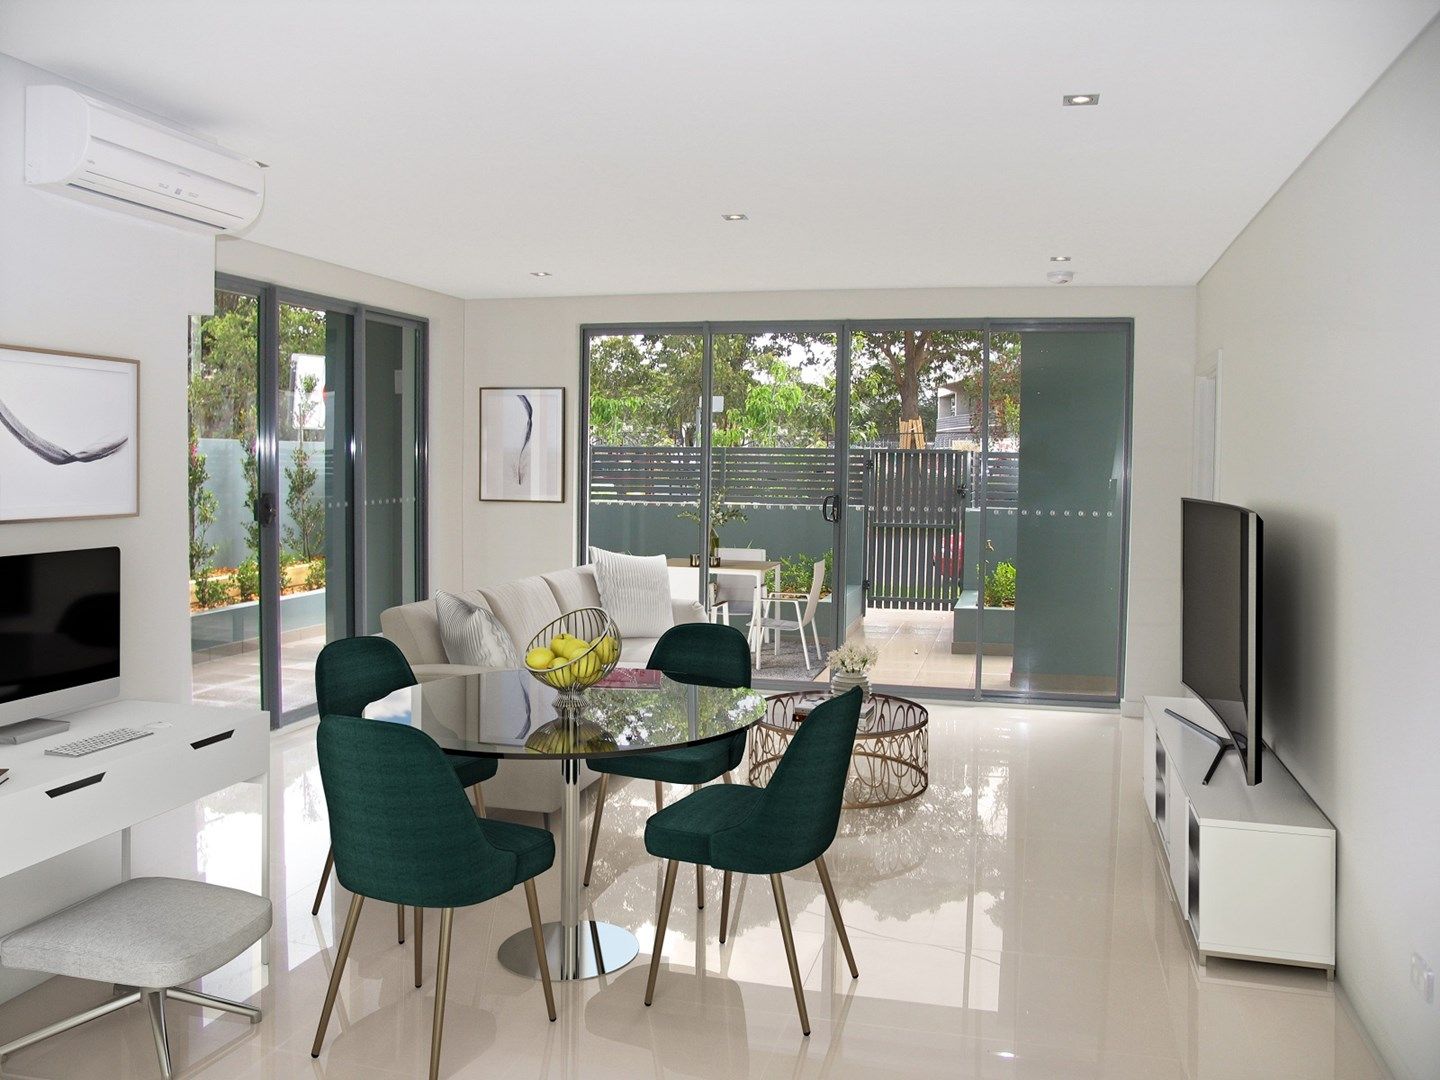 2 bedrooms Apartment / Unit / Flat in 8/20 Sailors Bay Road NORTHBRIDGE NSW, 2063